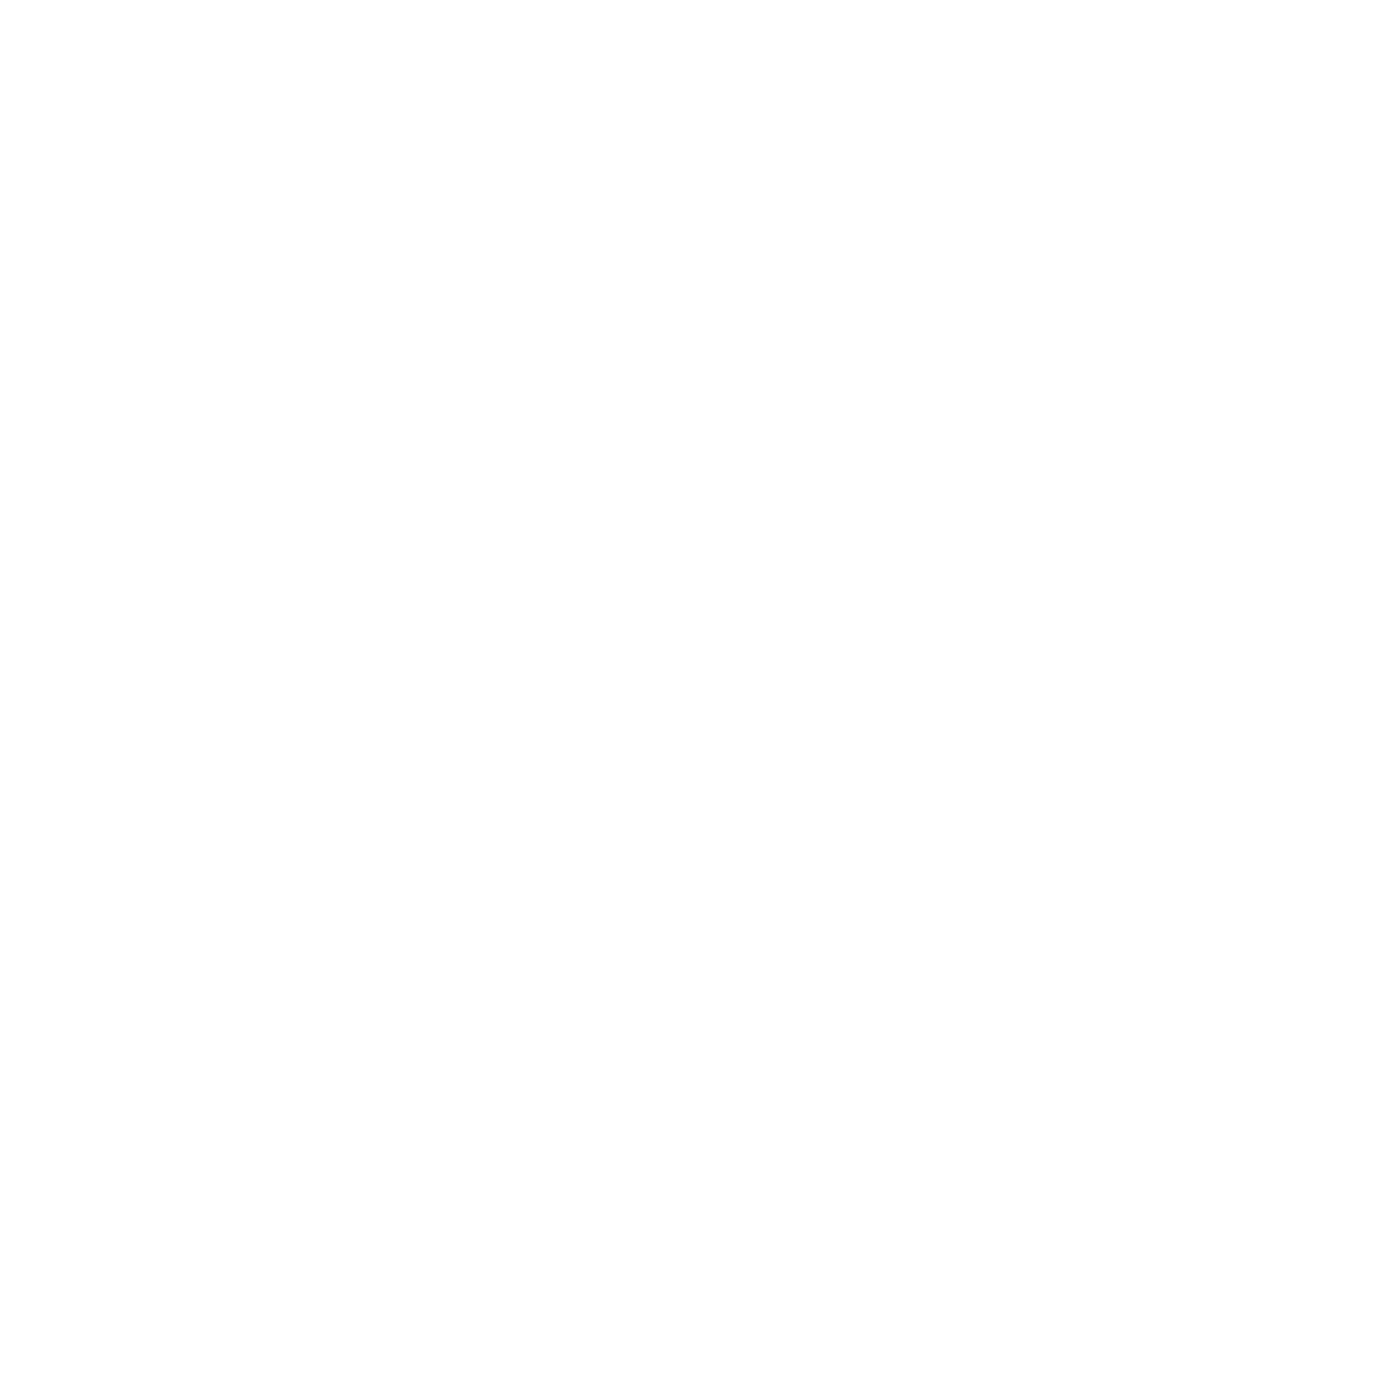 John Steele Consulting Logo (Large) (8)